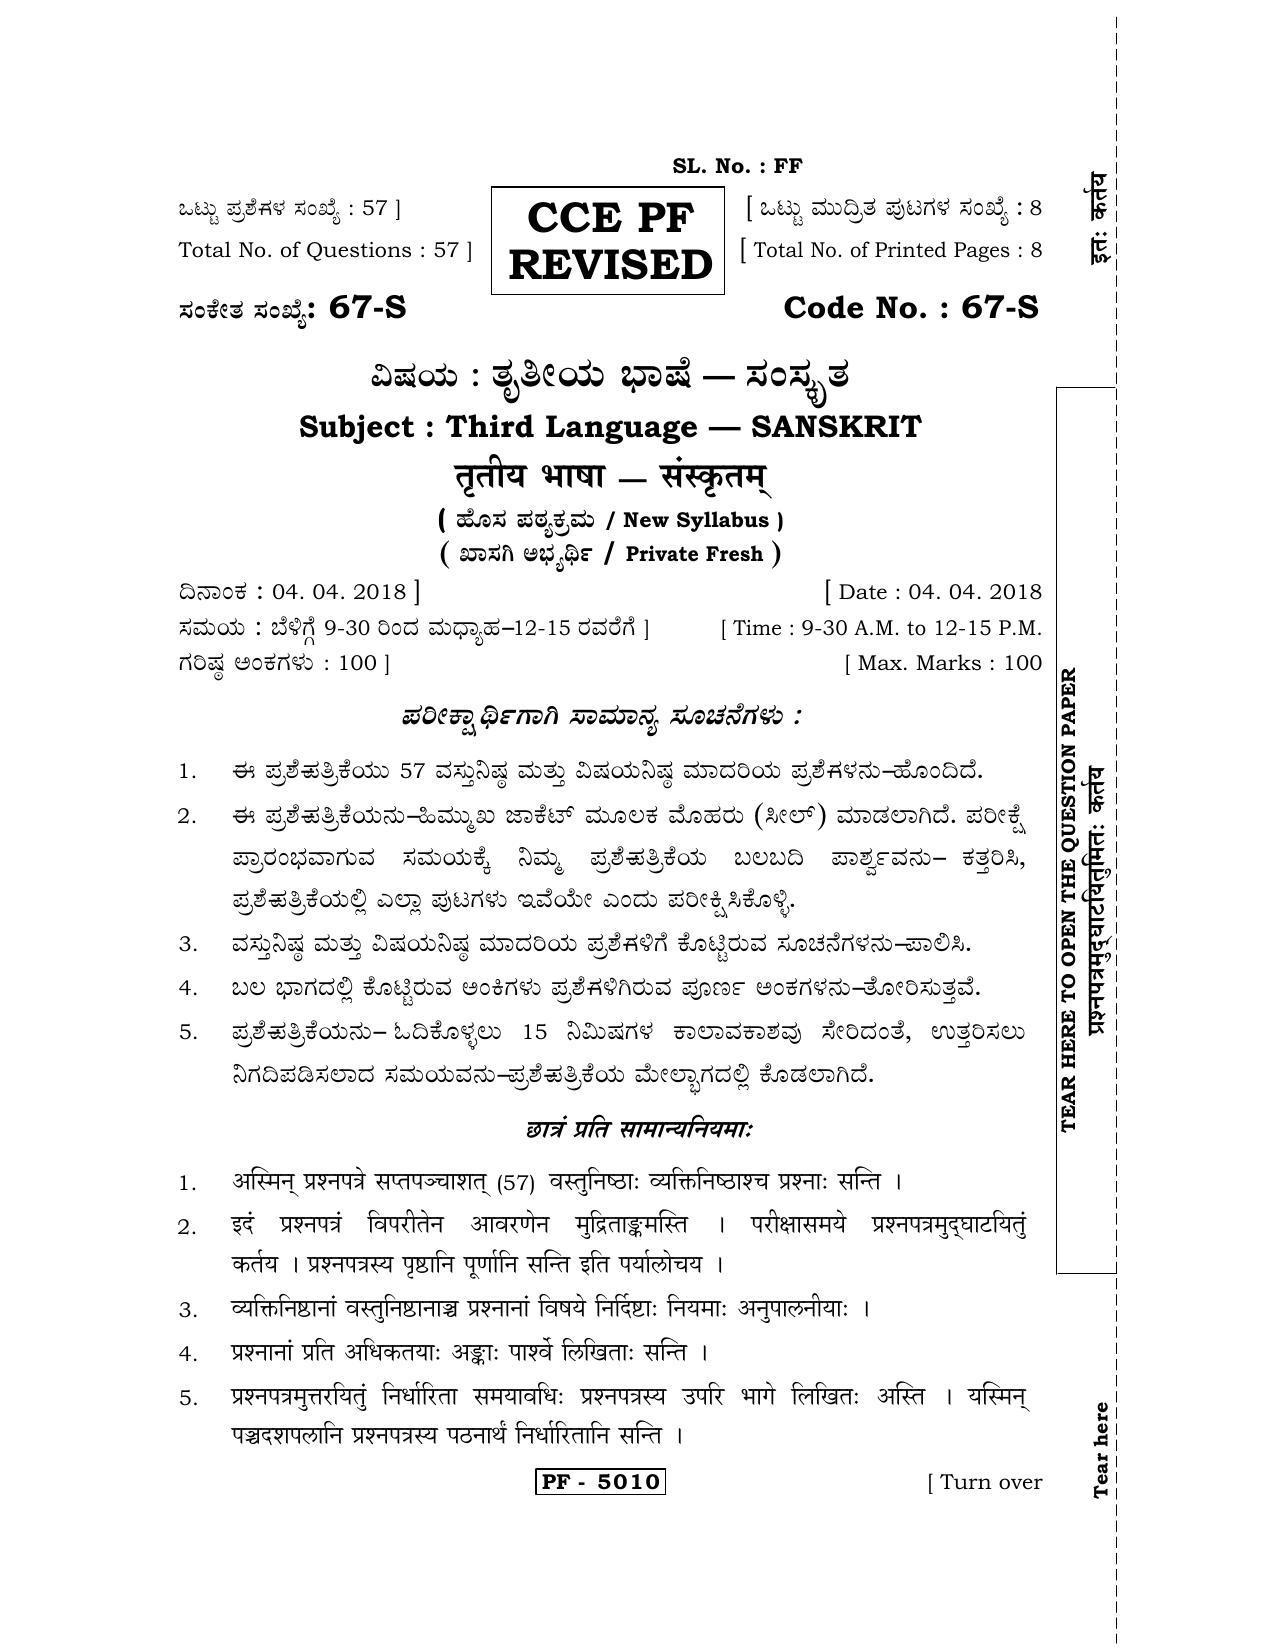 Karnataka SSLC Sanskrit - Third Language - SANSKRIT (67-S-CCE PF REVISED_39) April 2018 Question Paper - Page 1